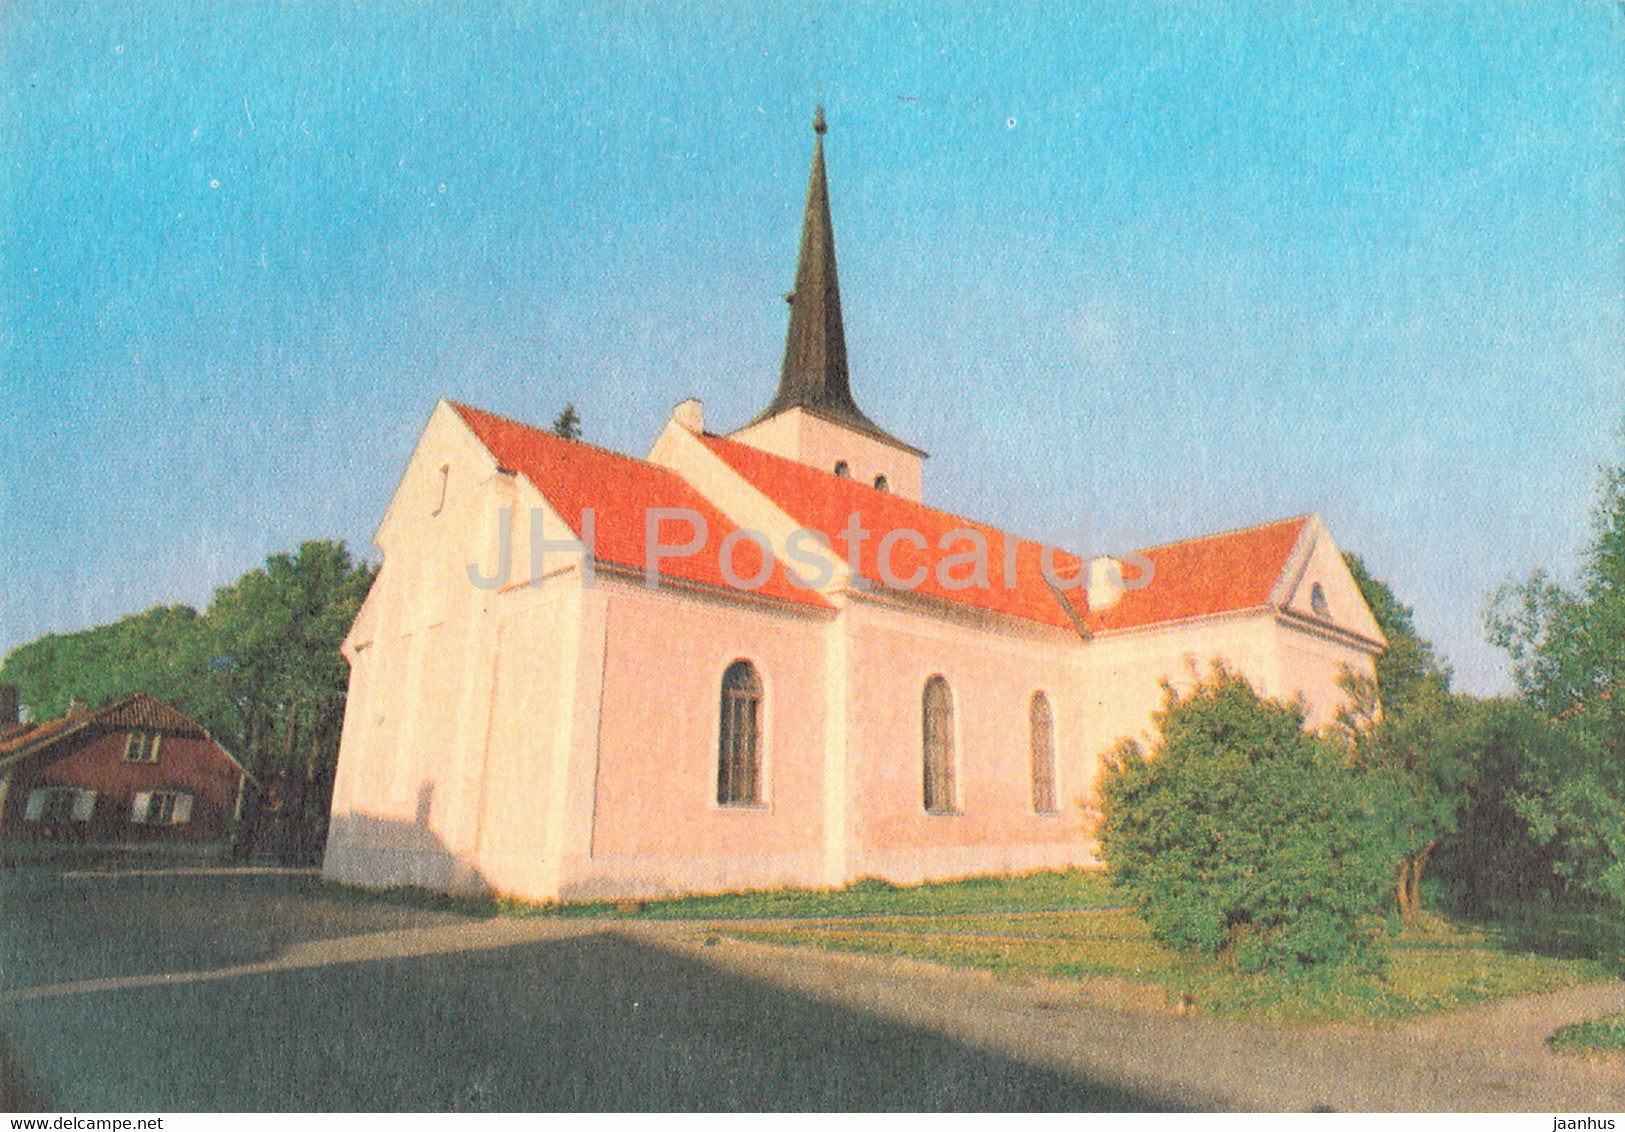 Paide - Holy Cross Church - 1993 - Estonia - unused - JH Postcards